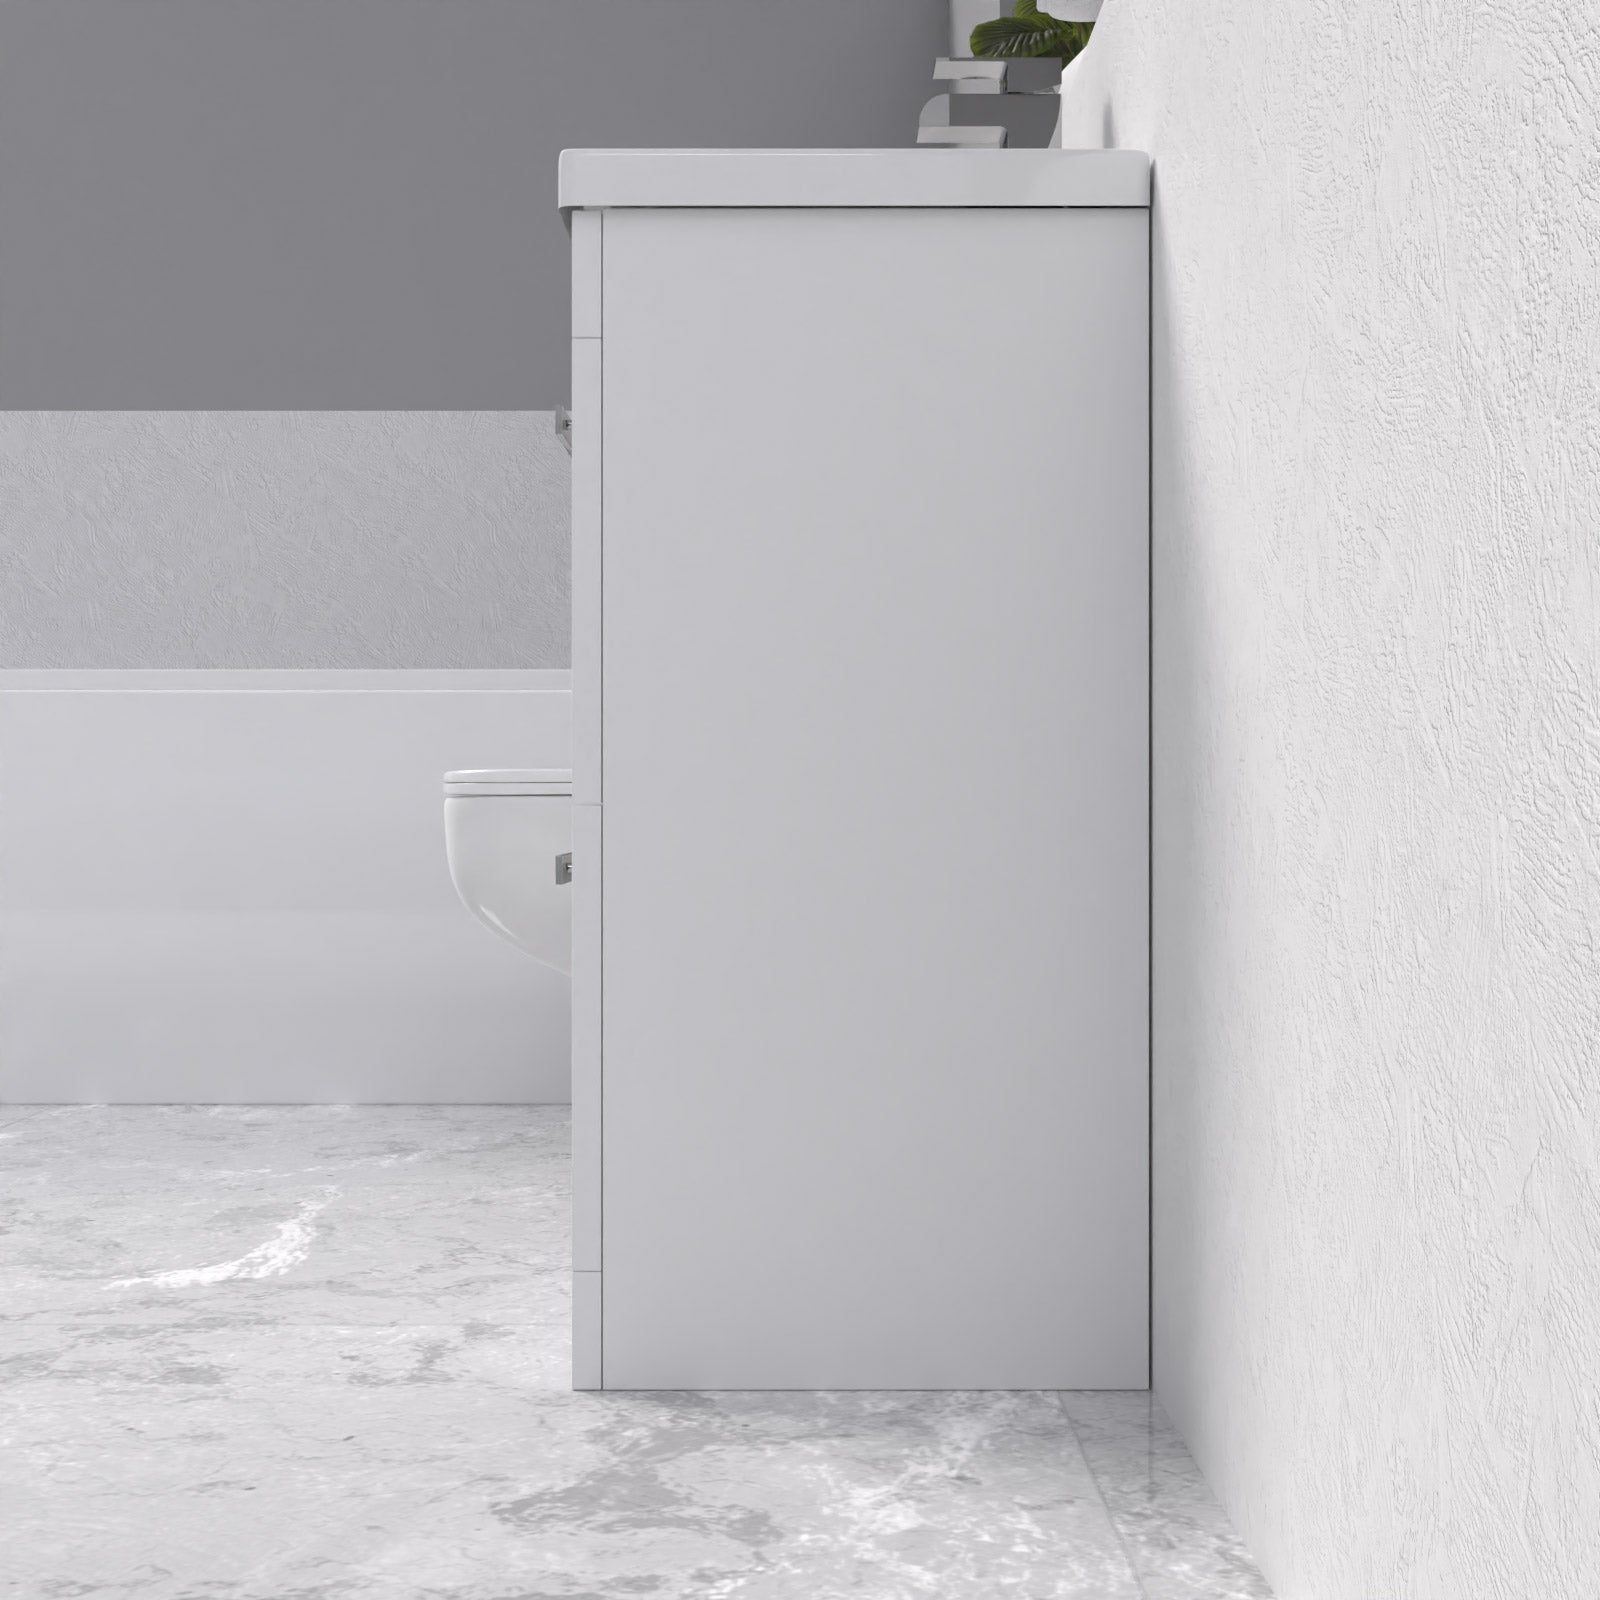 Nanuya White 500mm 2 Drawers Basin Vanity and Close Coupled Toilet